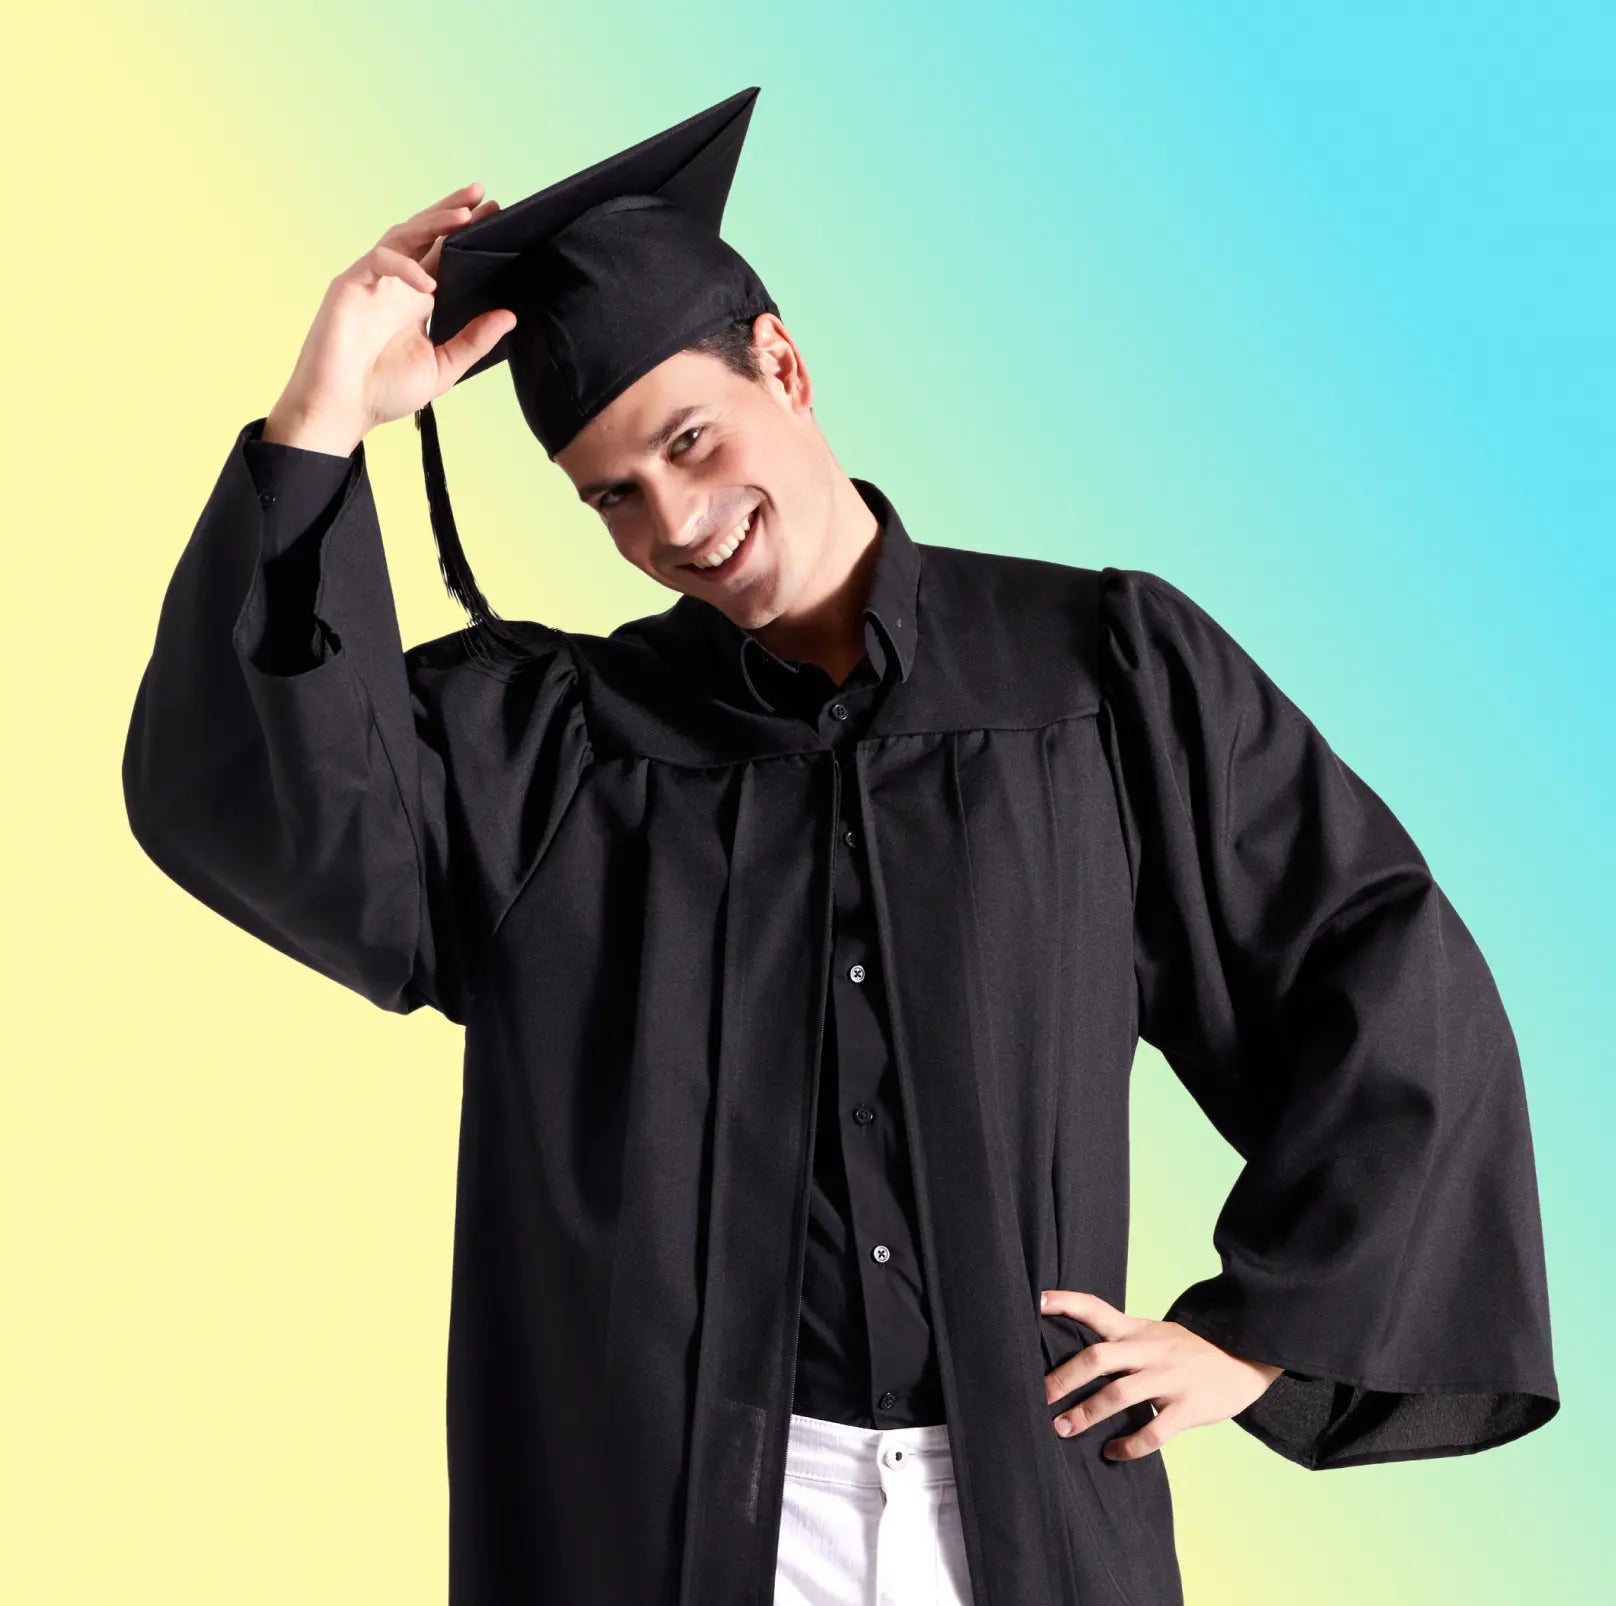 Male graduate shows the proper way to wear a regalia cap